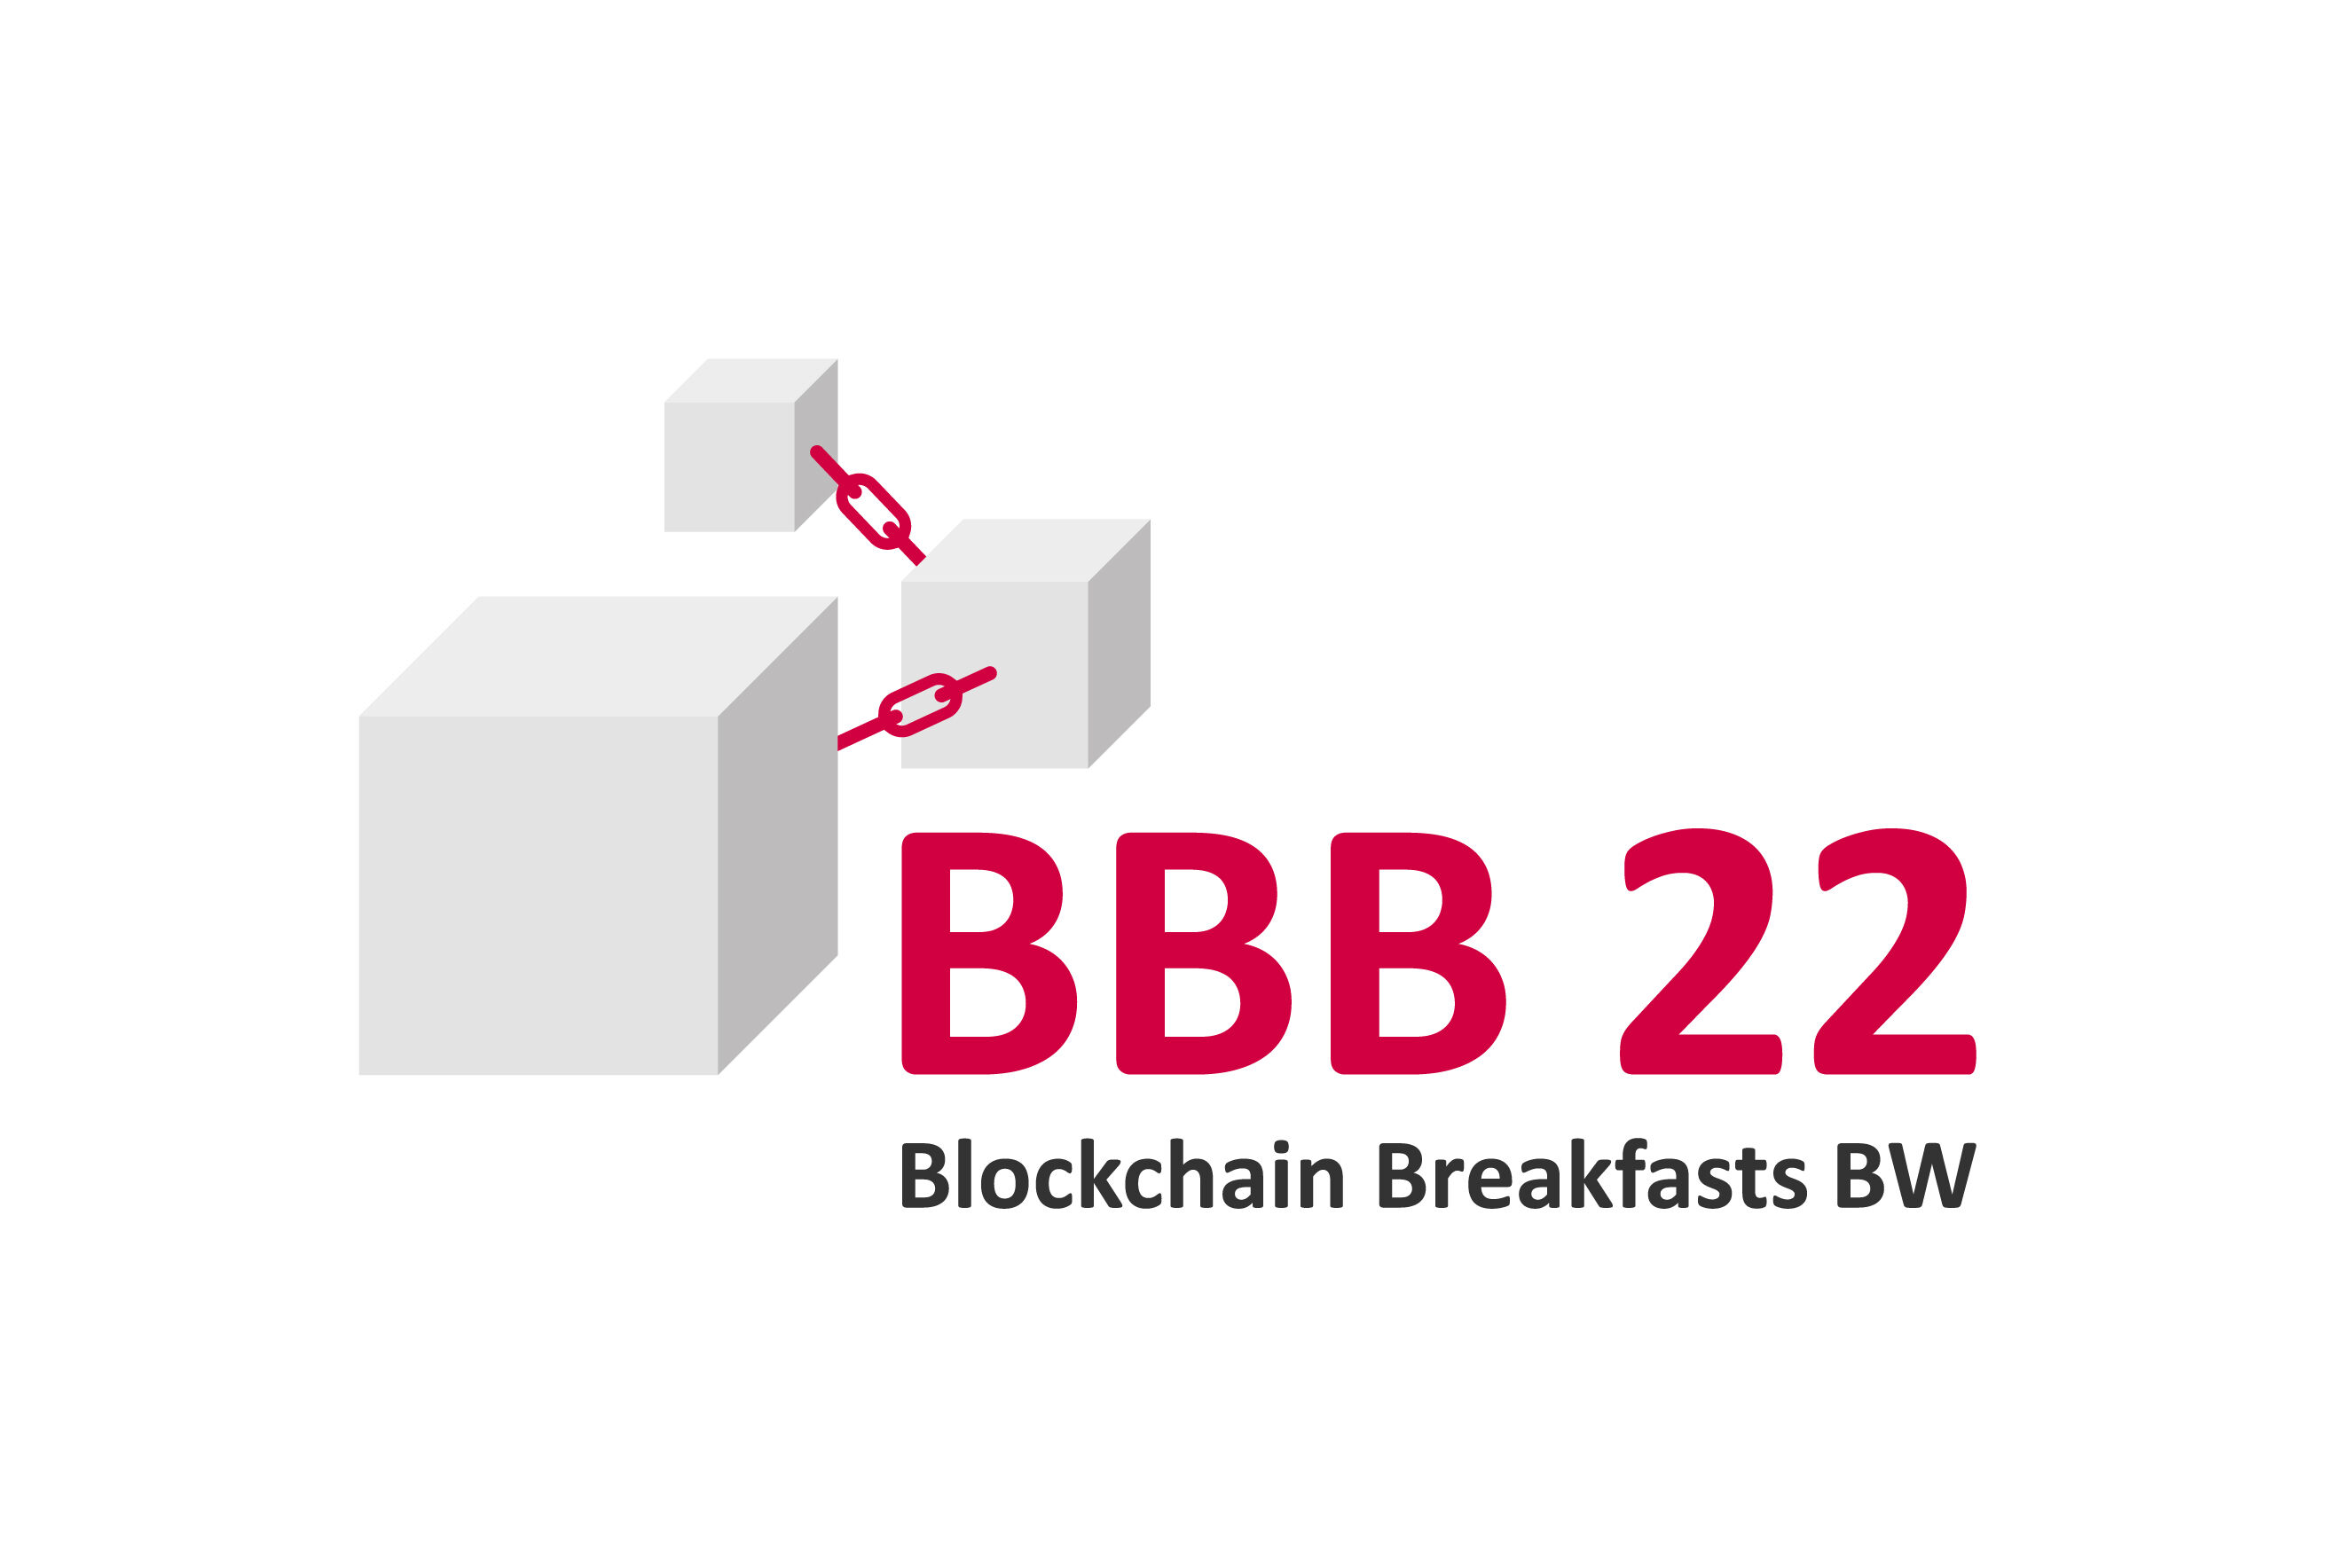 Logo zum Blockchain Breakfasts BW 2022 (BBB 22) 